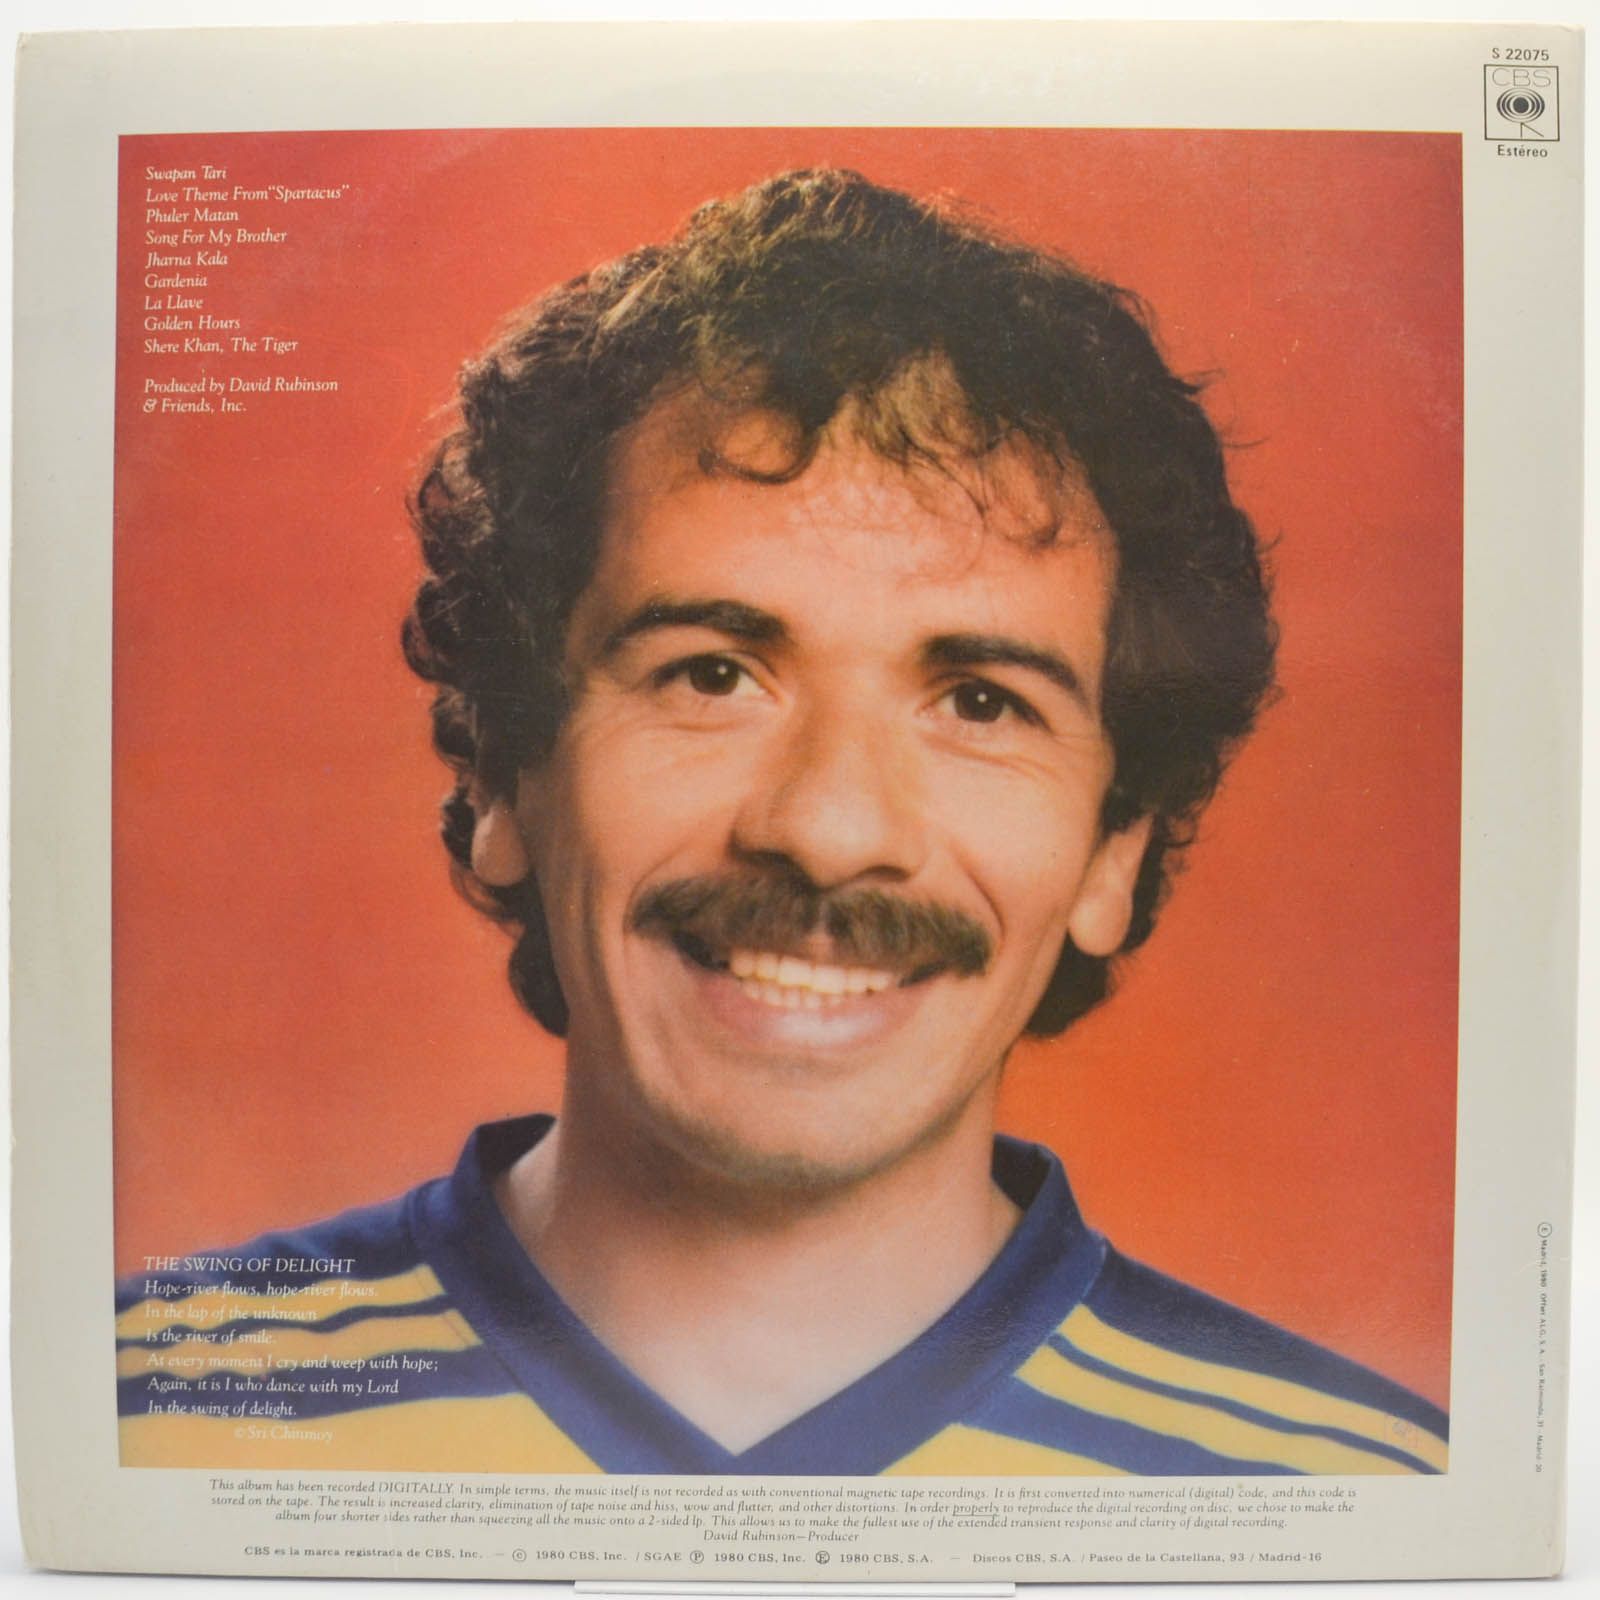 Devadip Carlos Santana — The Swing Of Delight (2LP), 1980